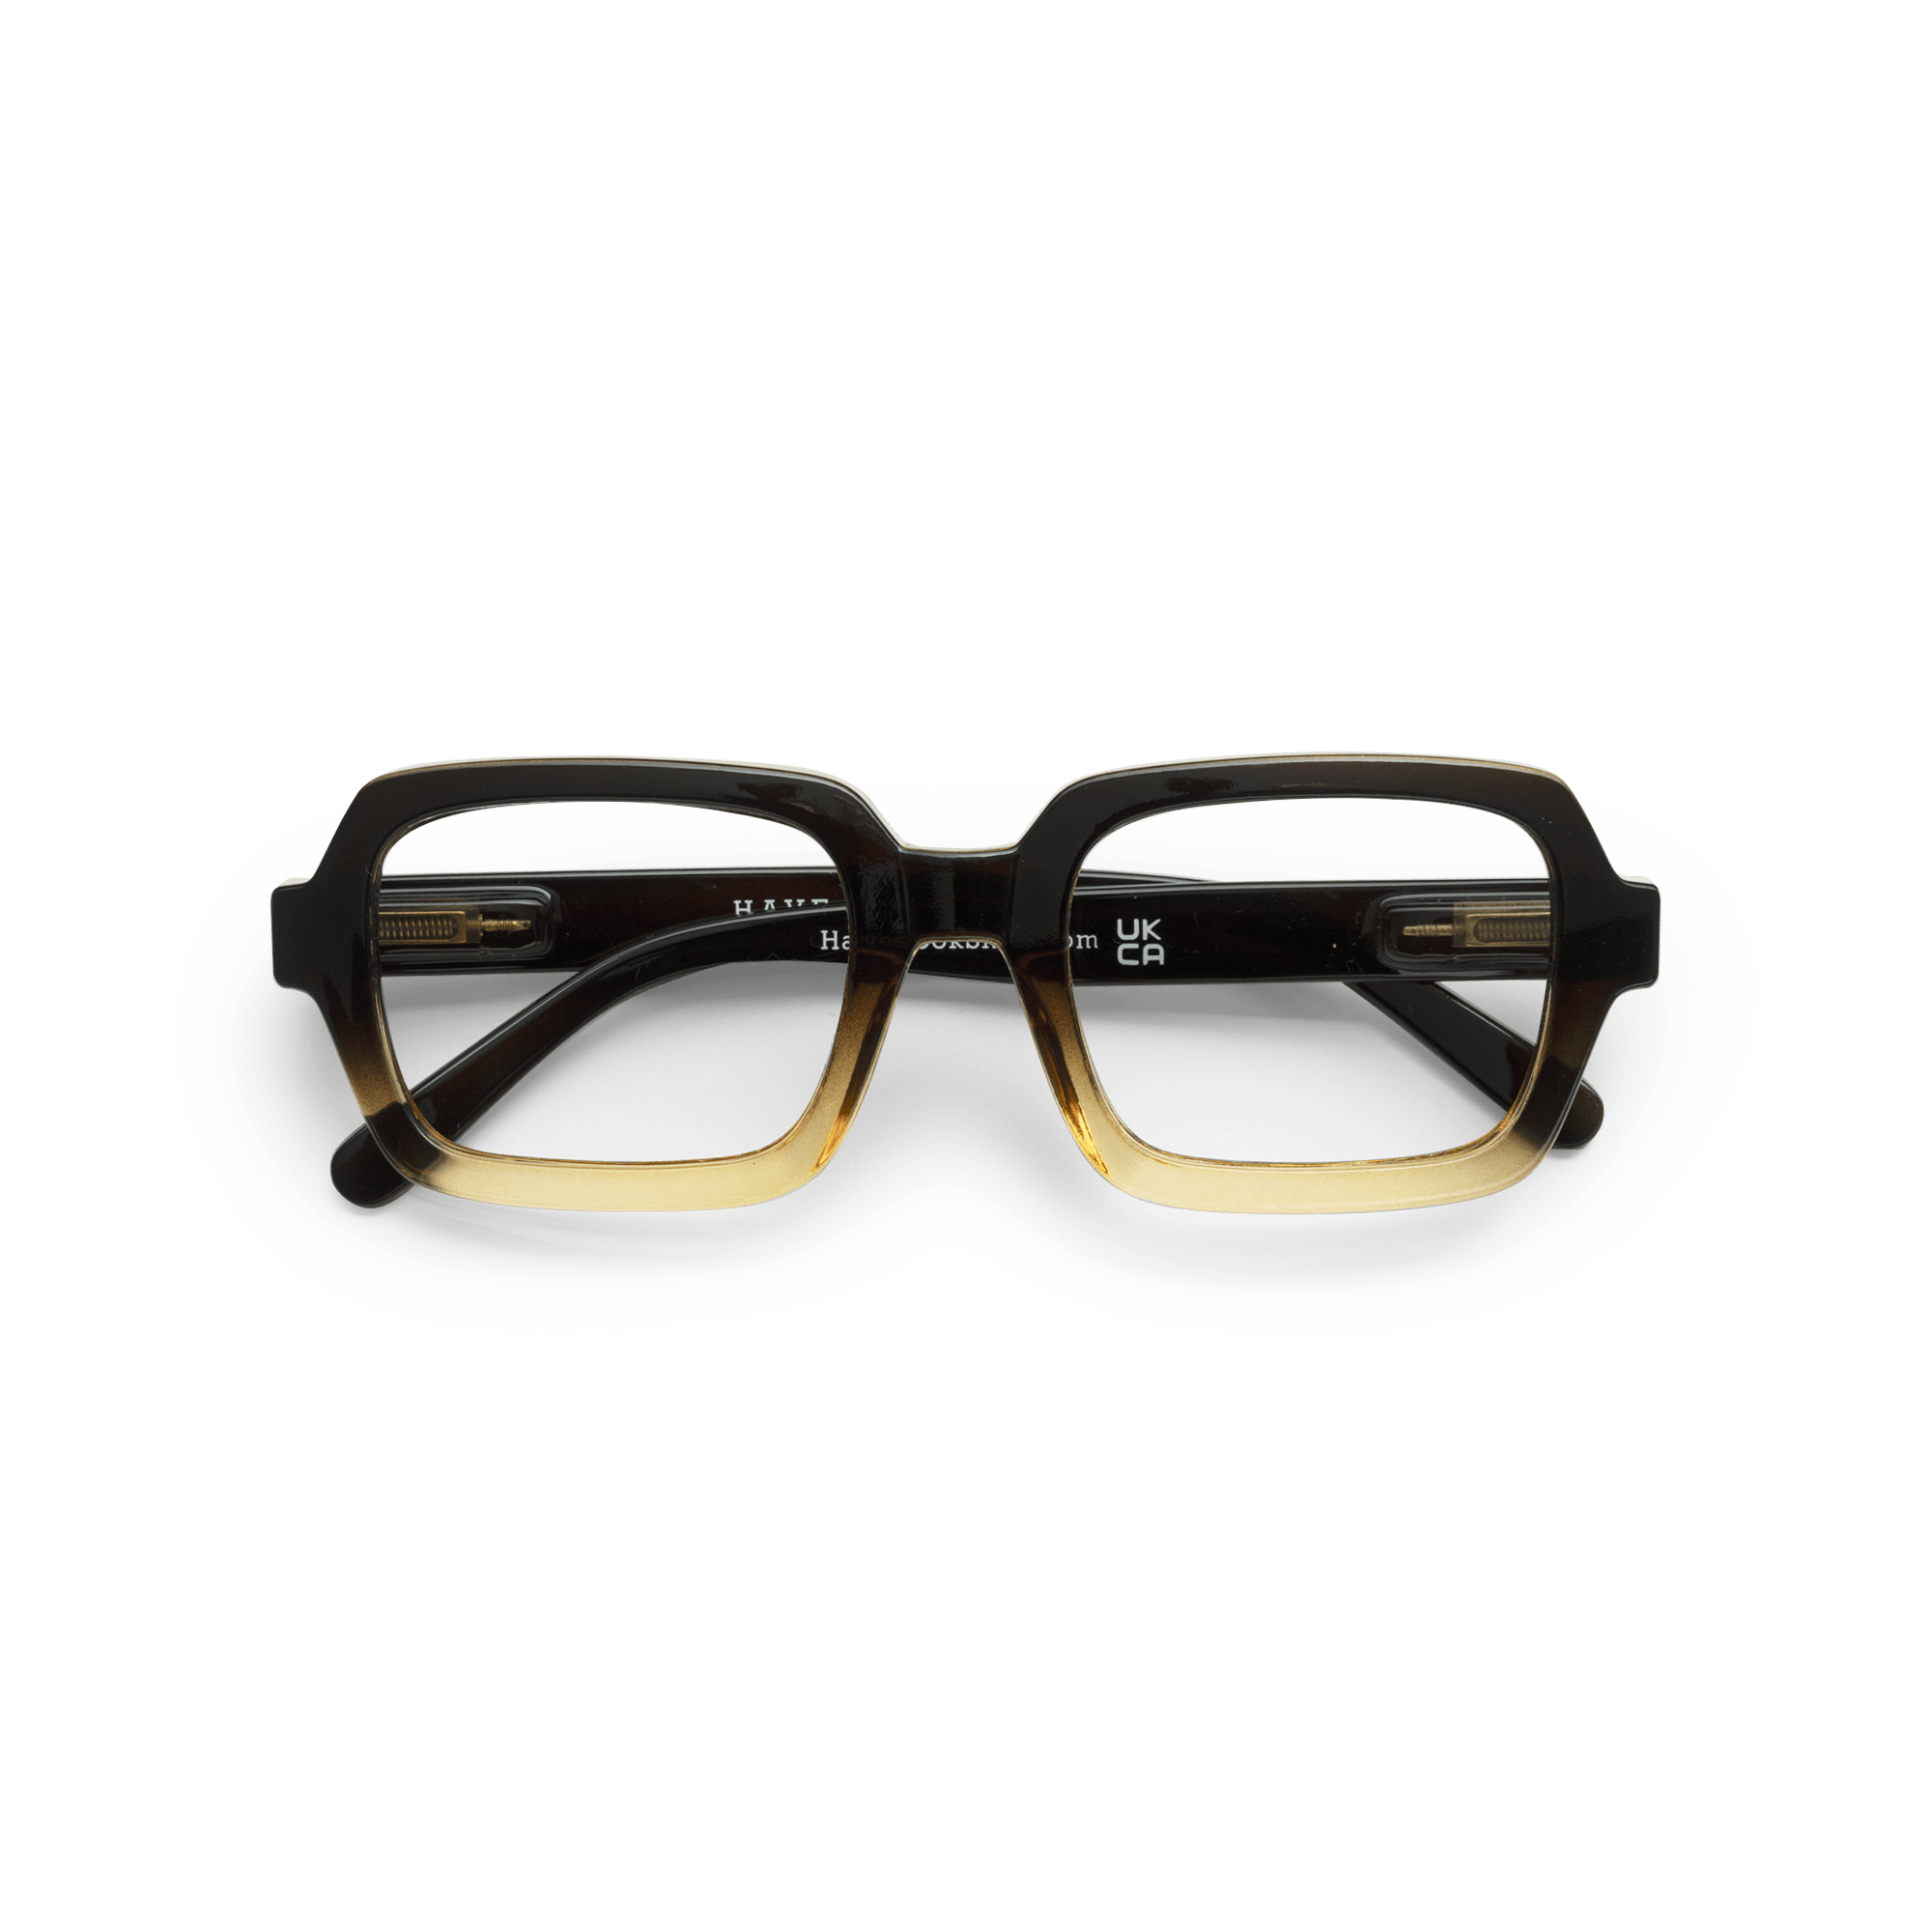 Minusglasögon Square - black/brown